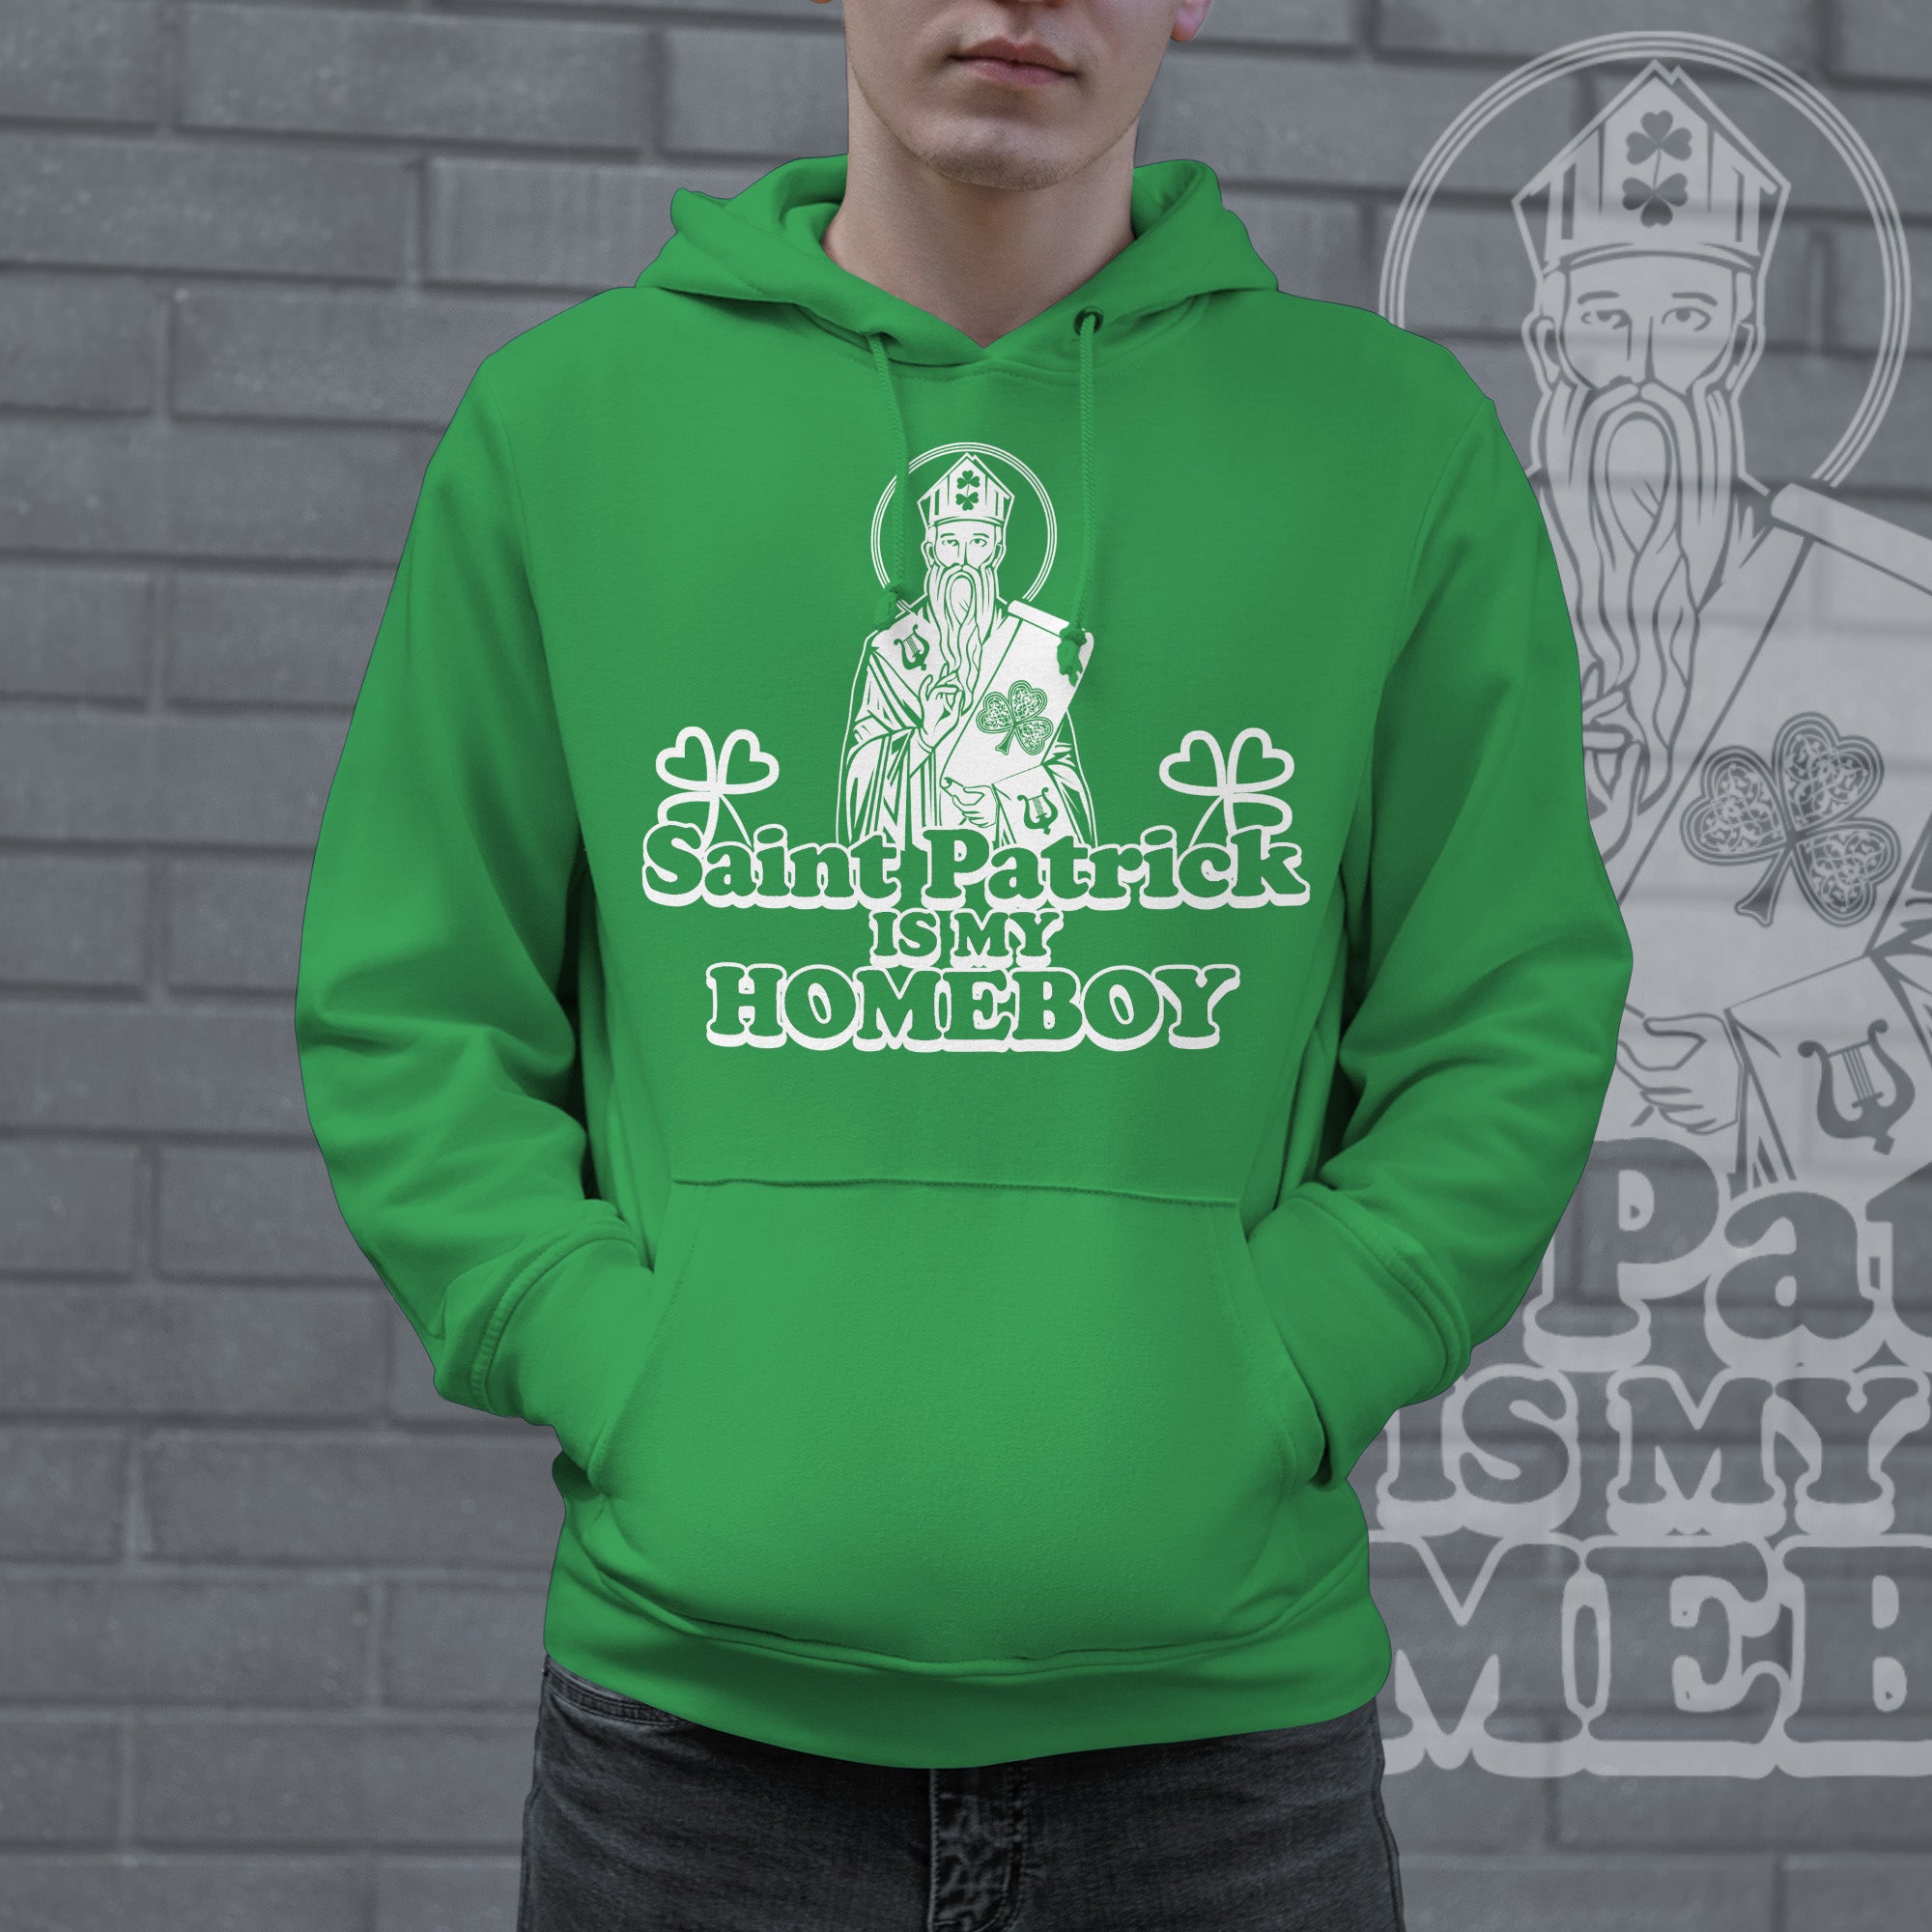 Funny Green Saint Patrick Is My Homeboy Hoodie Nerdy Saint Patrick's Day Sarcastic Tee